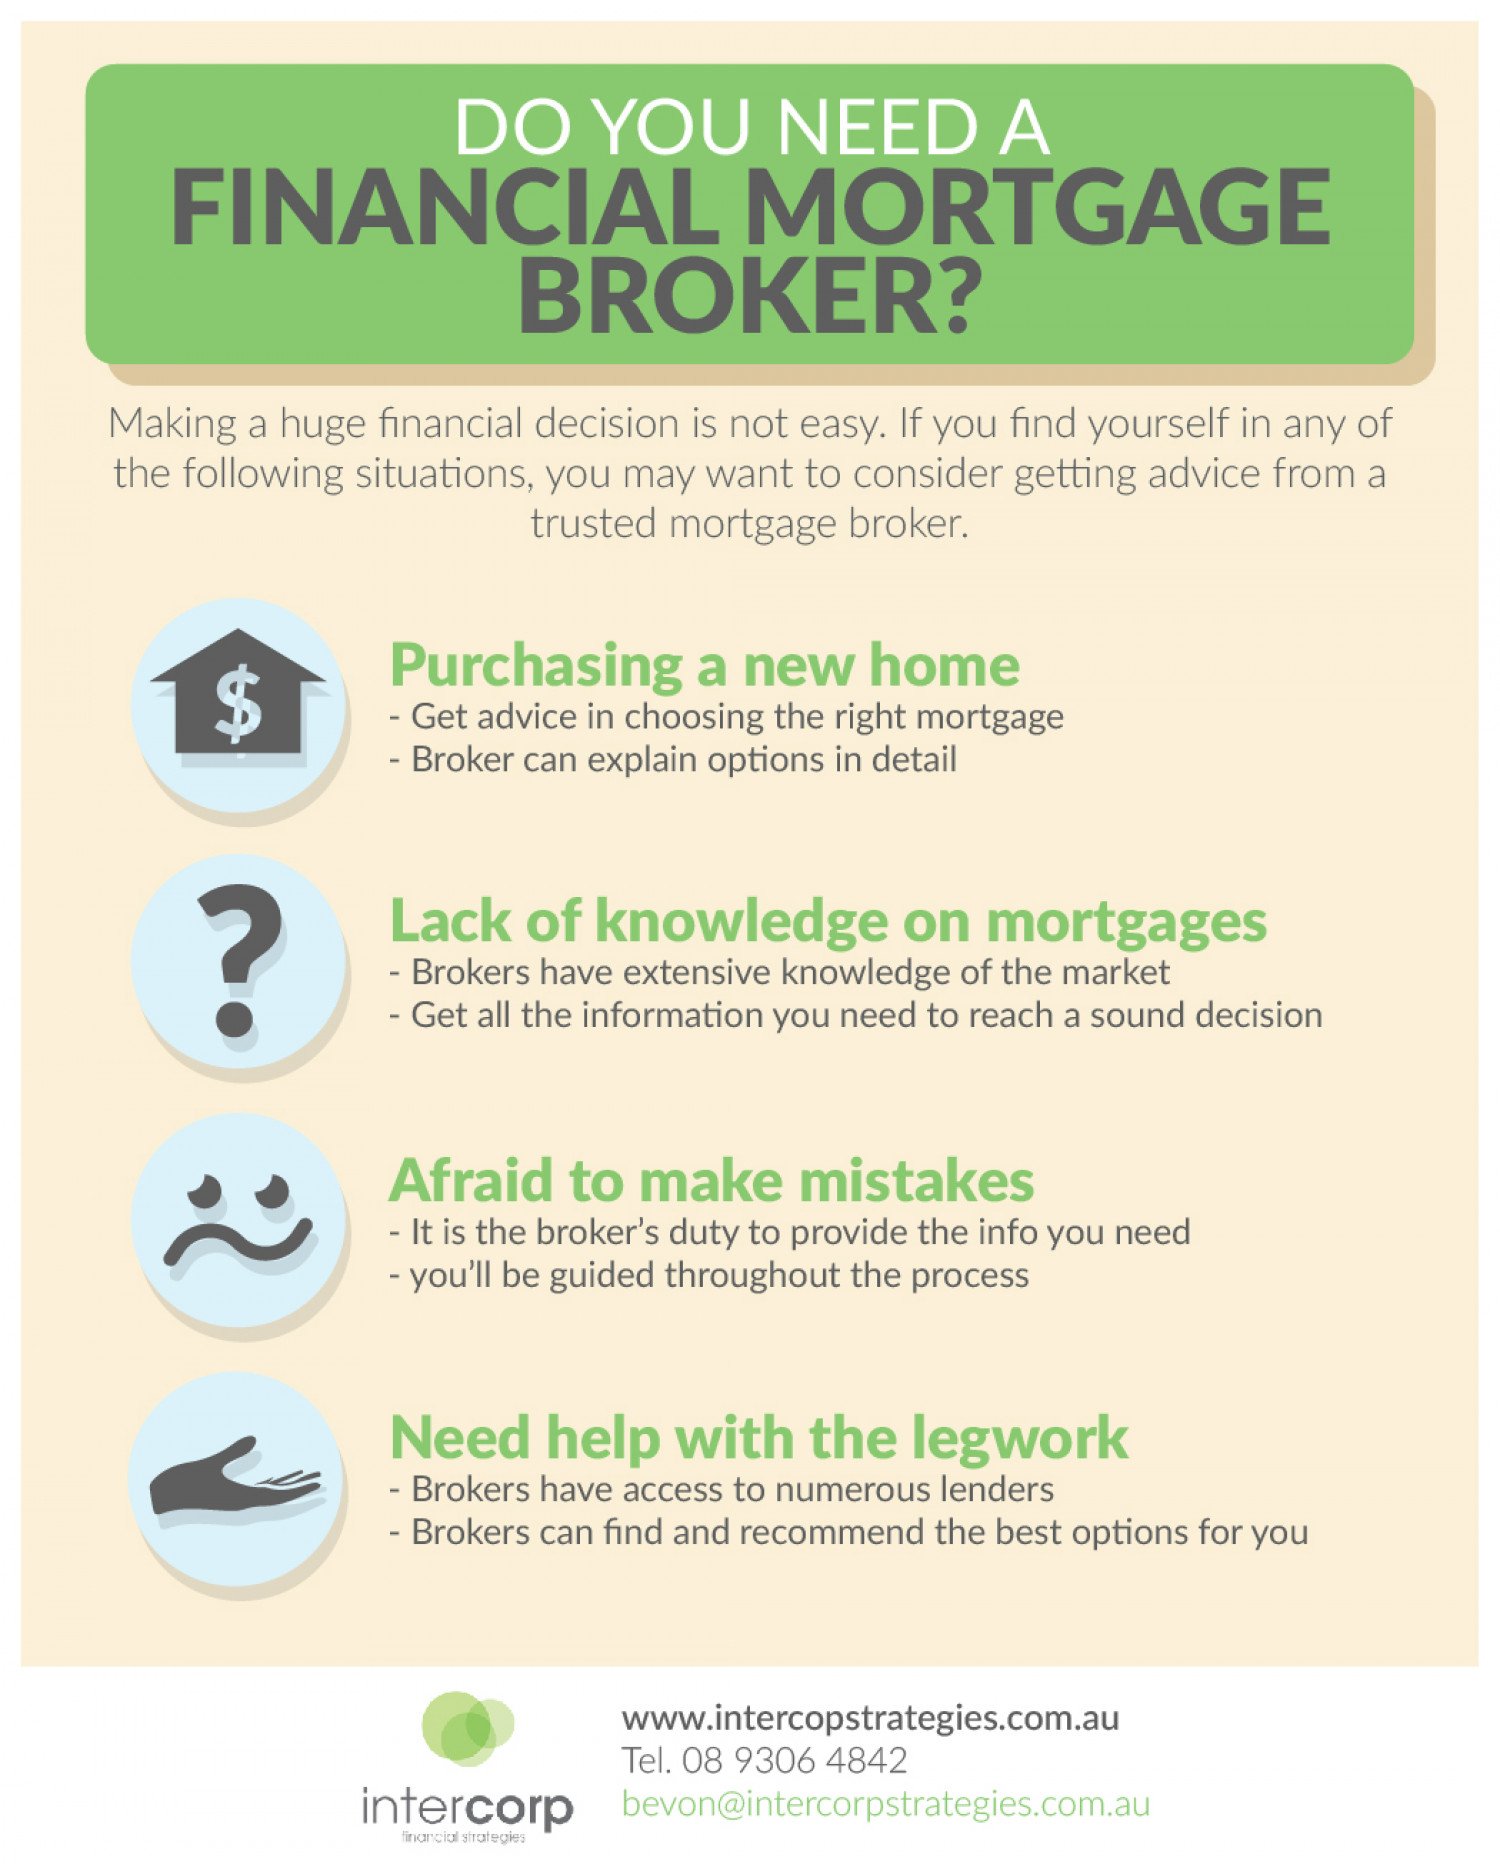 Do You Need a Financial Mortgage Broker?